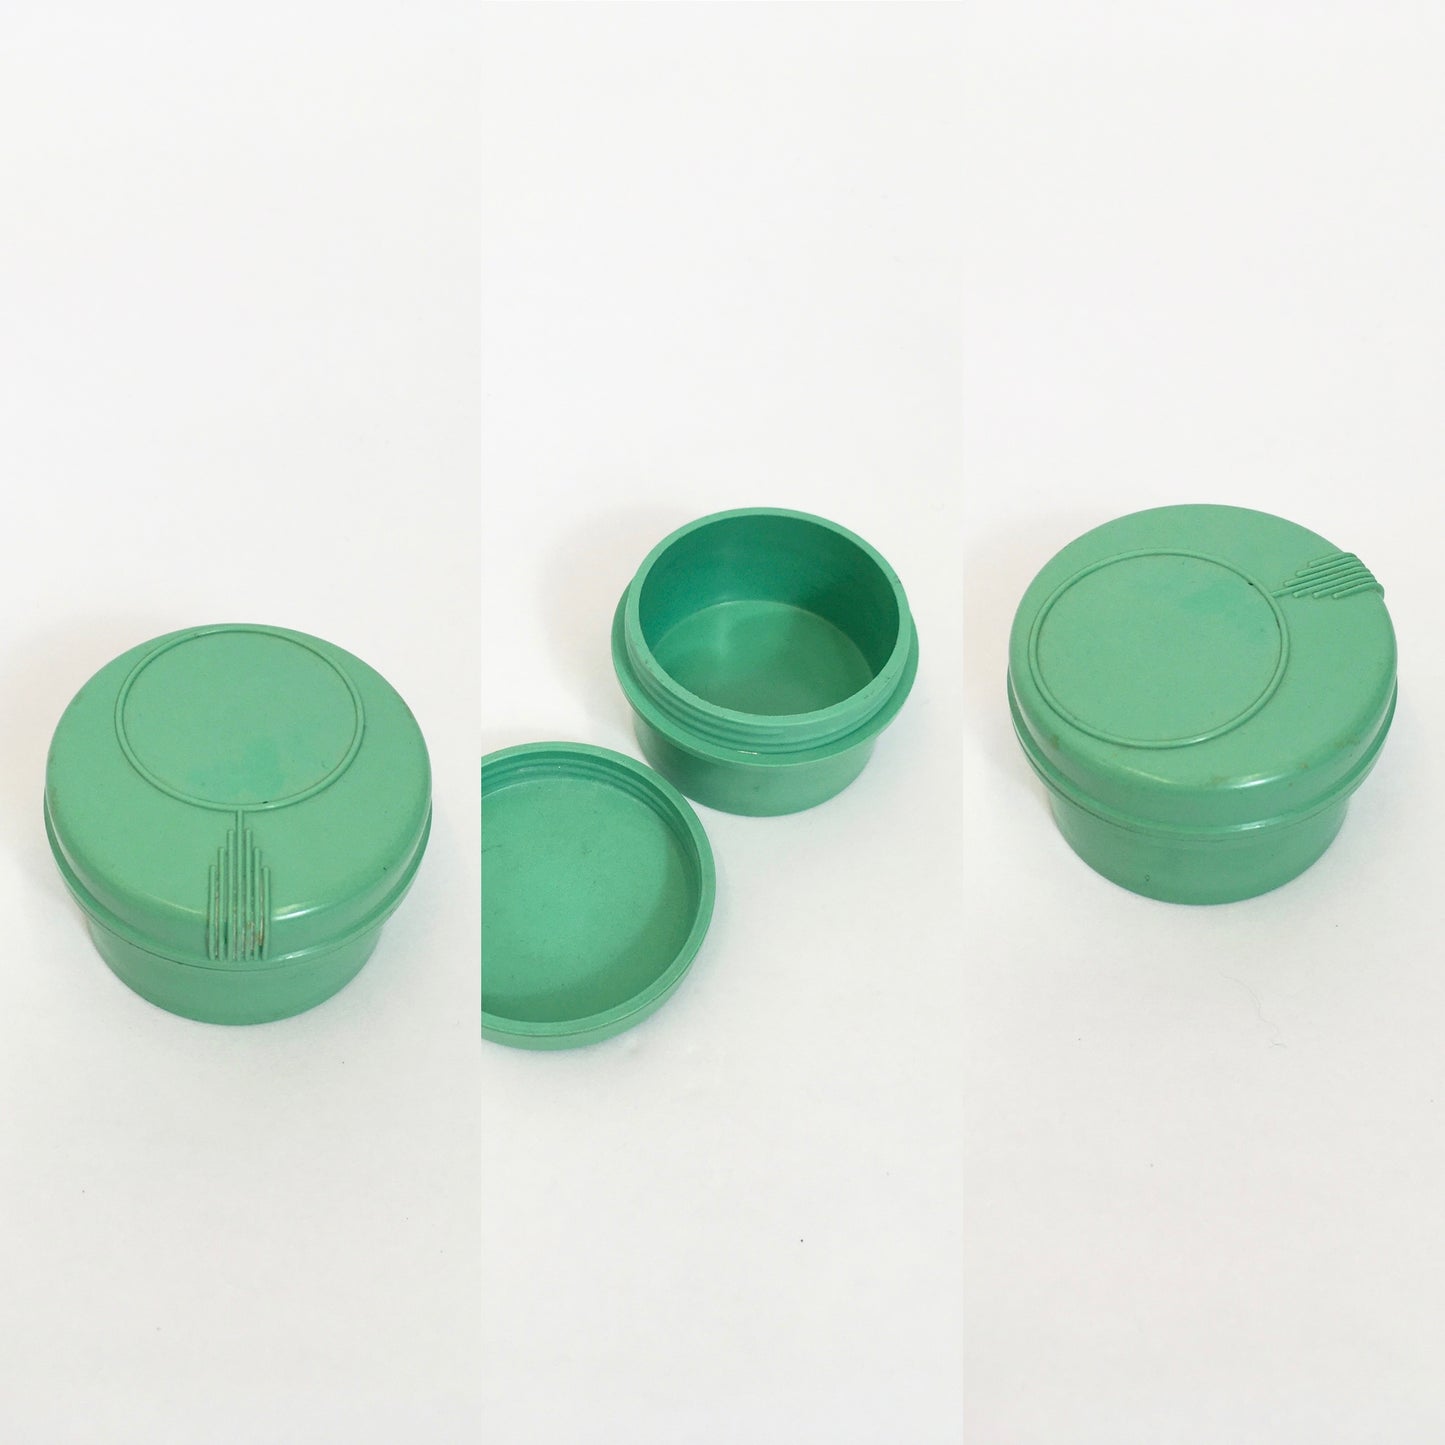 Original 1930's Darling Early Plastic Trinket Pot - In Deco Green